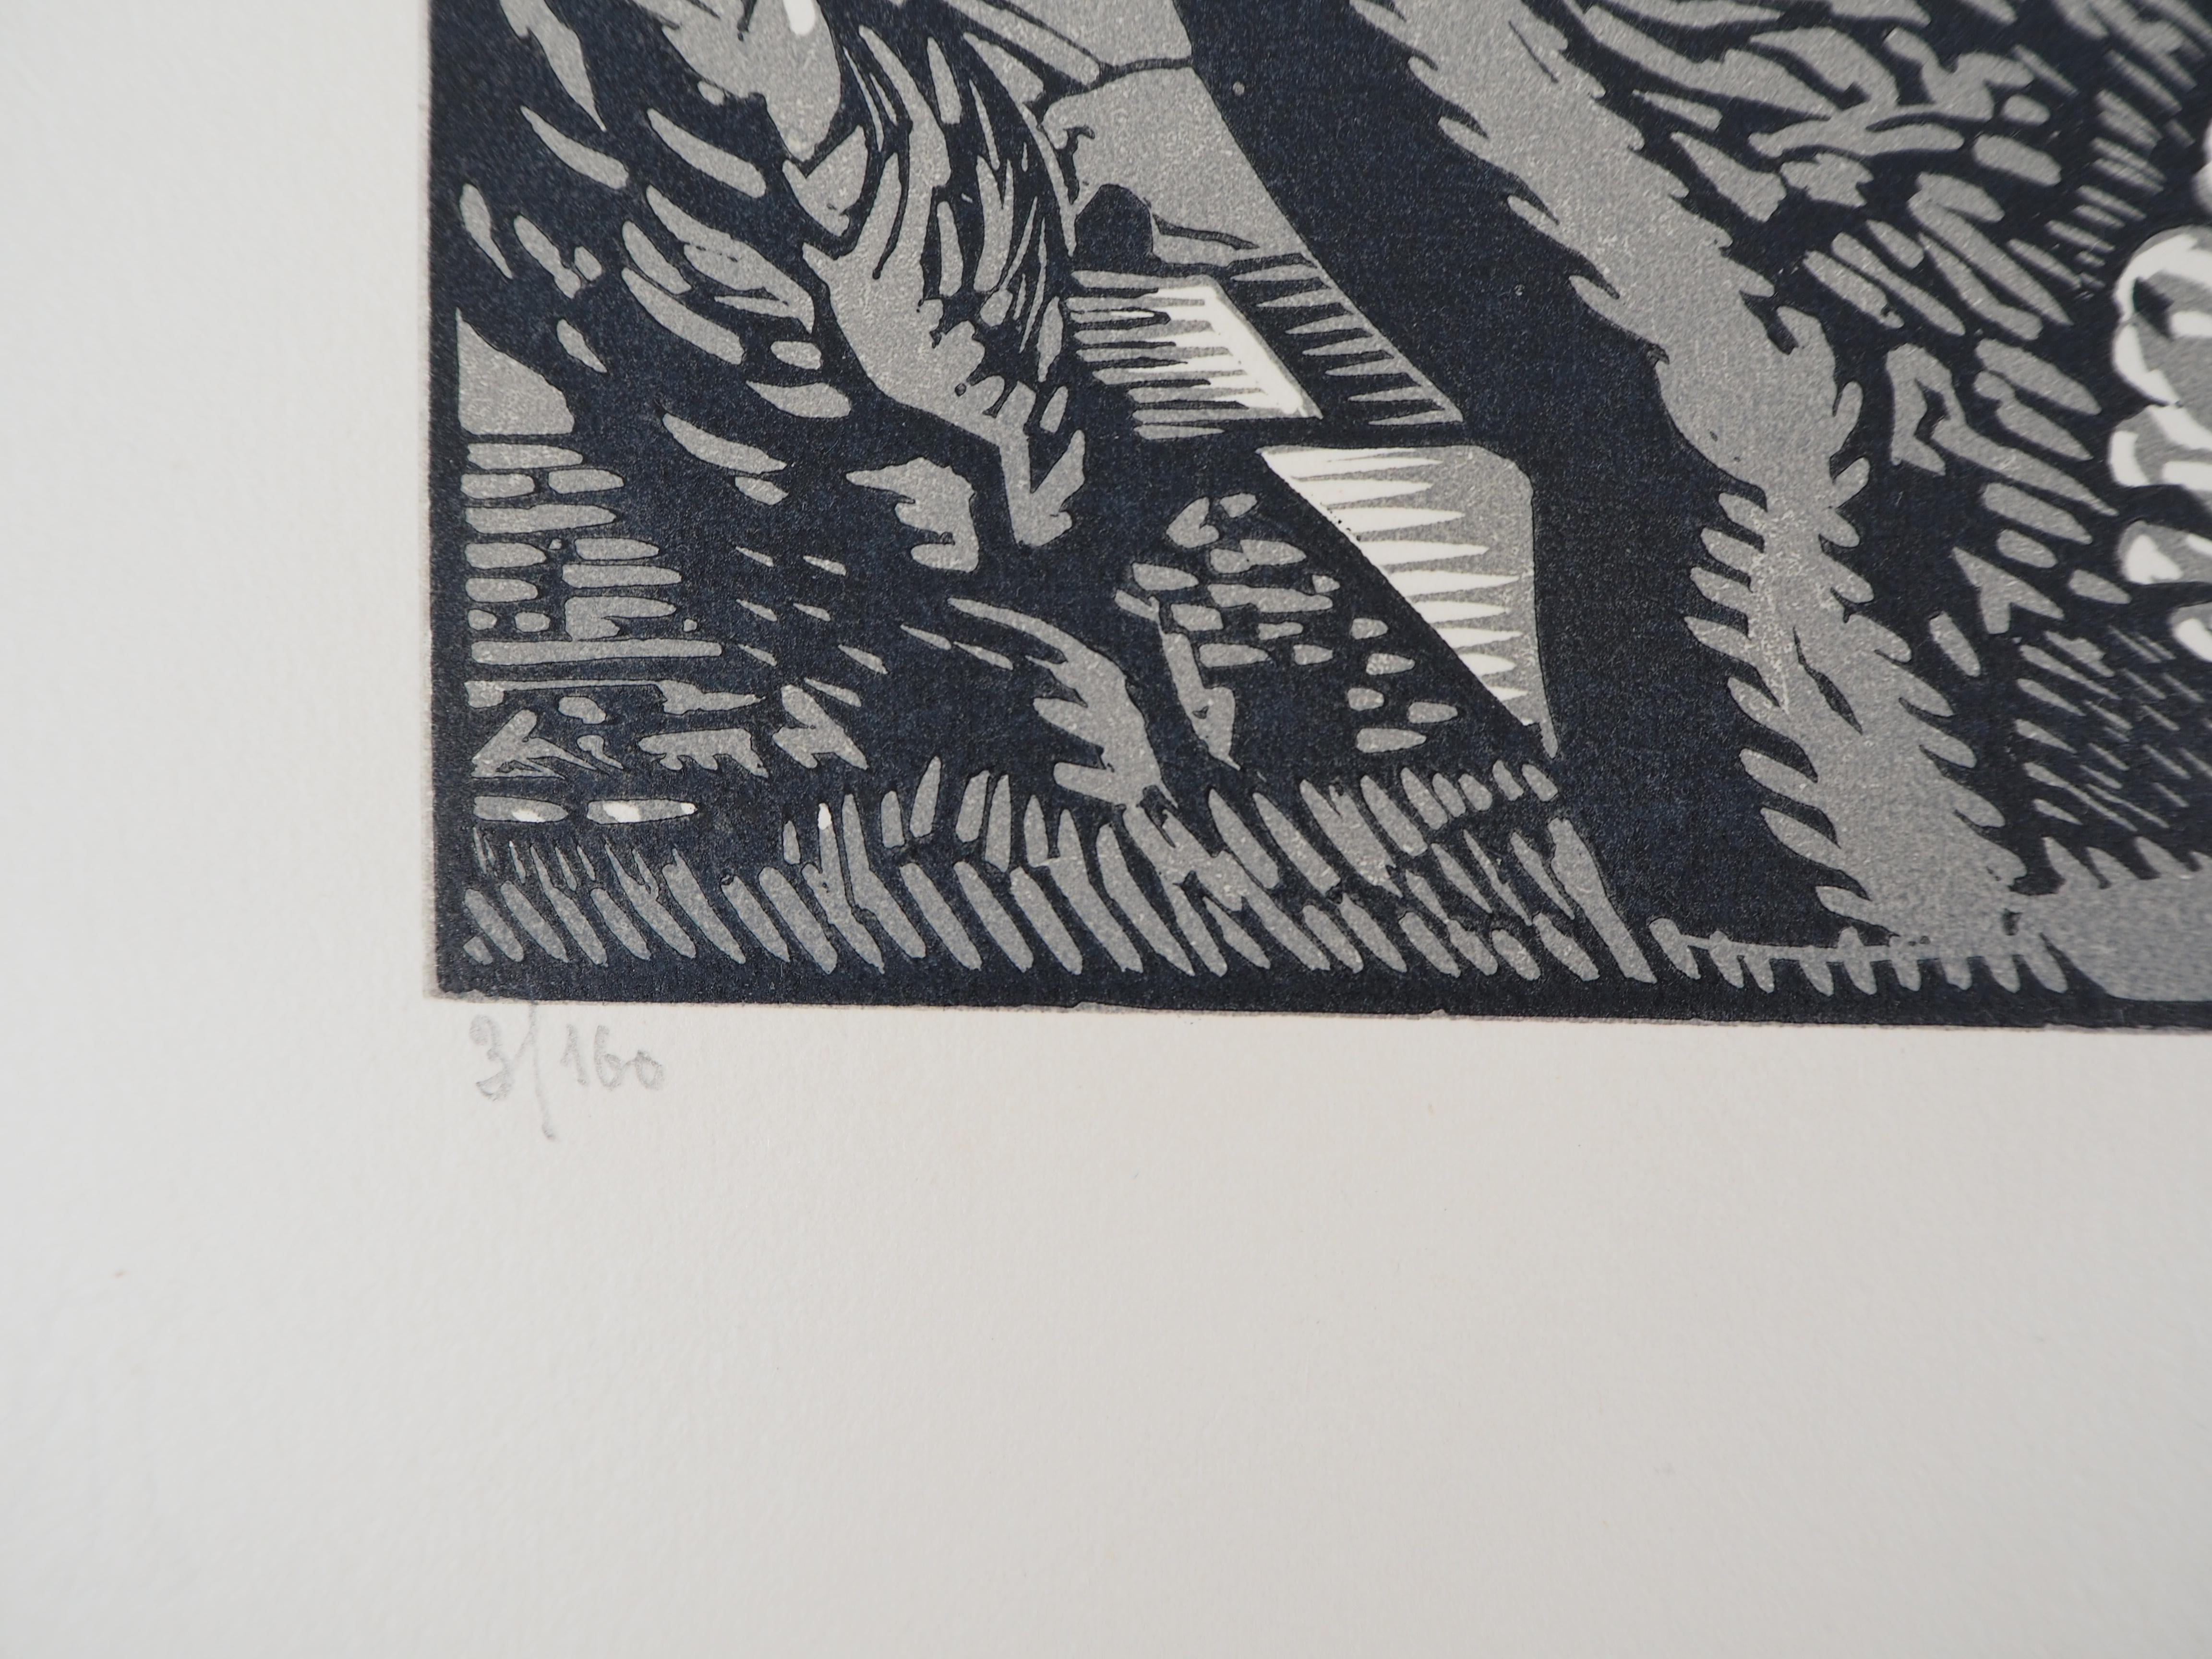 Charles Picart le Doux
Die alten Bäume (Art Deco), 1925

Original Holzschnitt
Handsigniert mit Bleistift
Nummeriert /160
Auf Pergament 32,5 x 25,5 cm (ca. 13 x 10 Zoll)
Trägt den Blindstempel des Herausgebers 'Imagier de la Gravure sur Bois' (Lugt